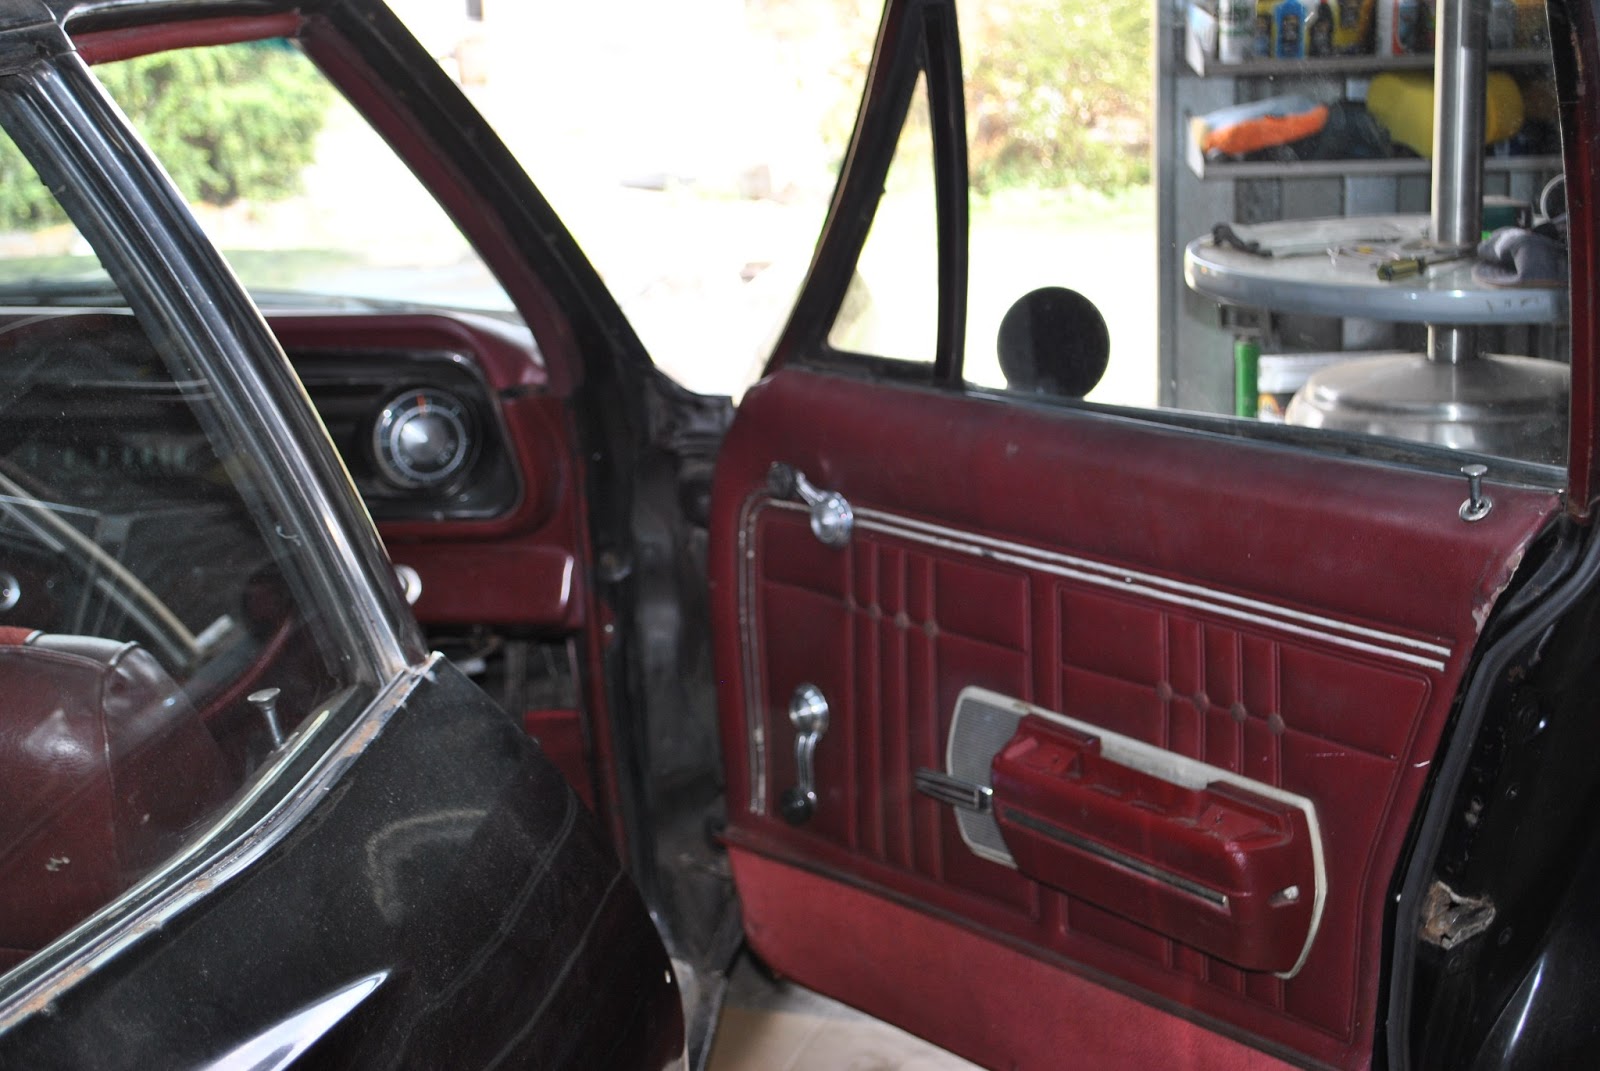 Restoring A 1968 Chevy Impala Interior View